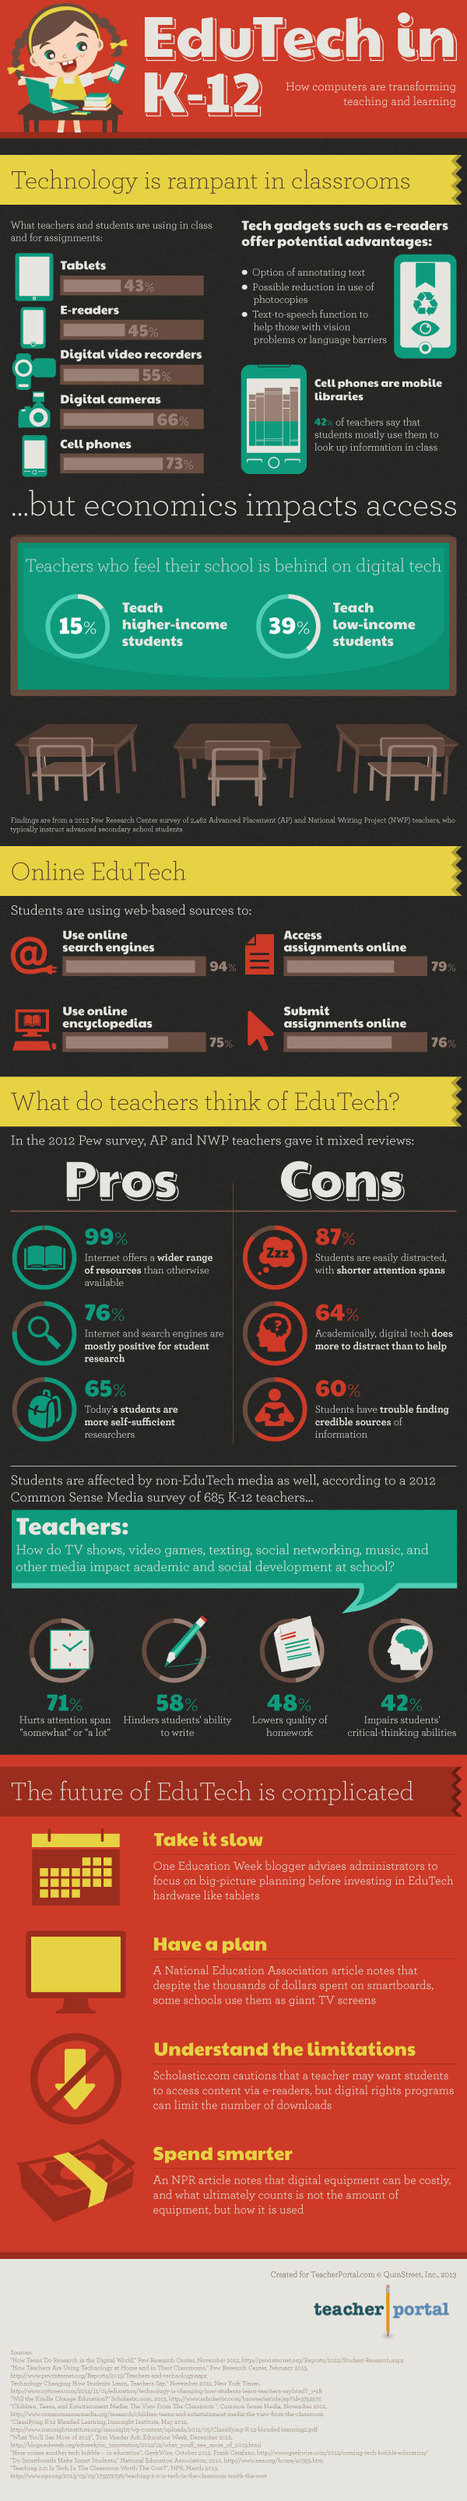 EduTech in K-12 (infographic) | Education 2.0 & 3.0 | Scoop.it